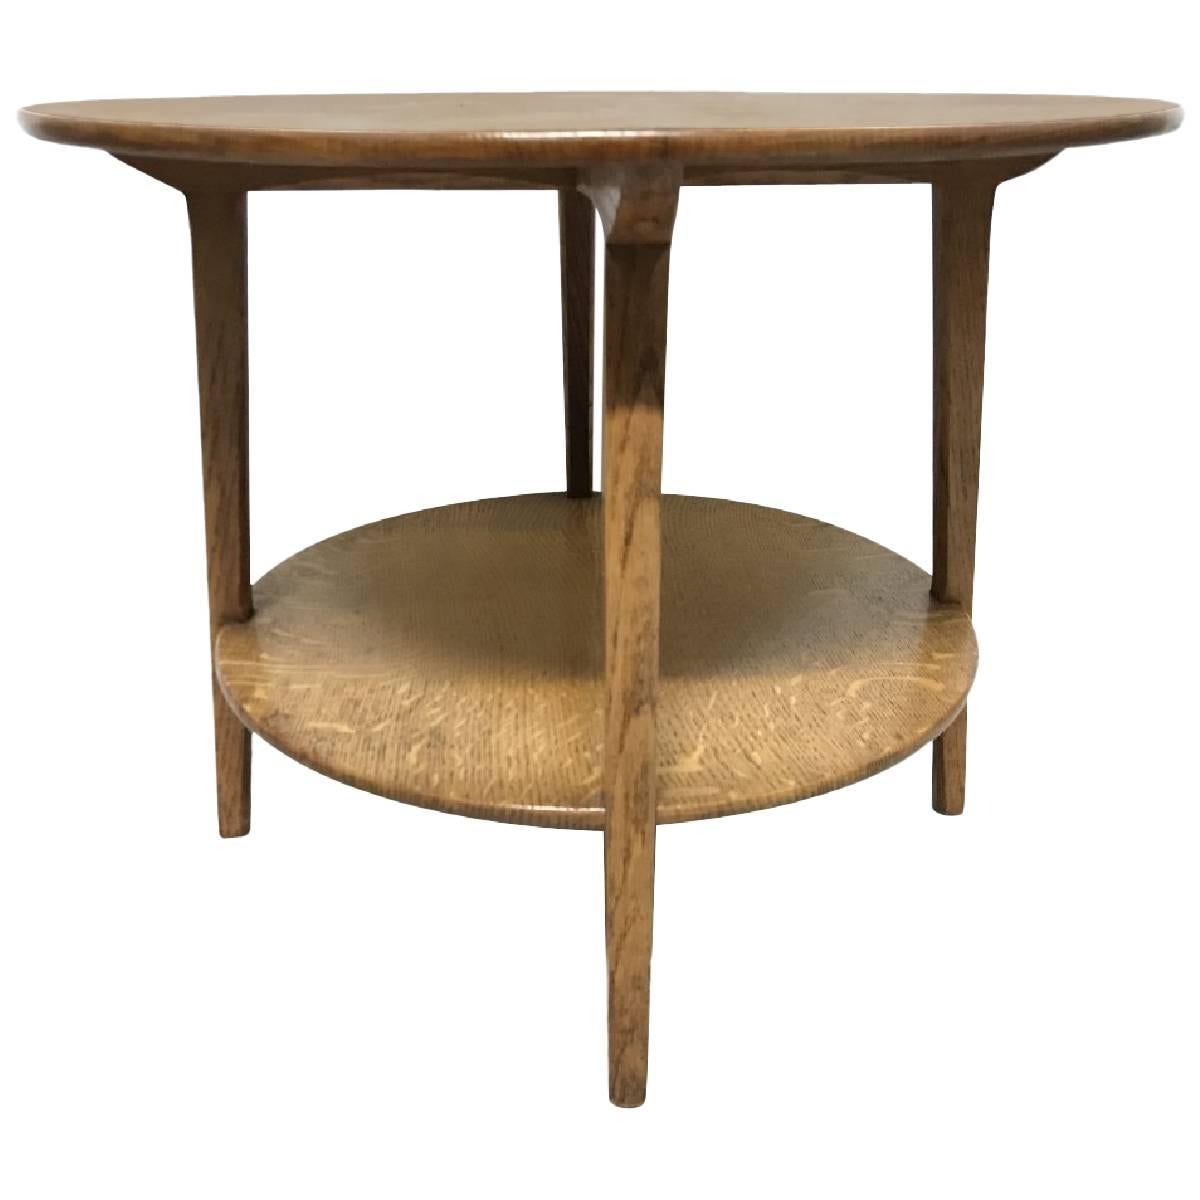 Edward Barnsley, An Arts & Crafts Oak Two-Tier Circular Coffee or Side Table